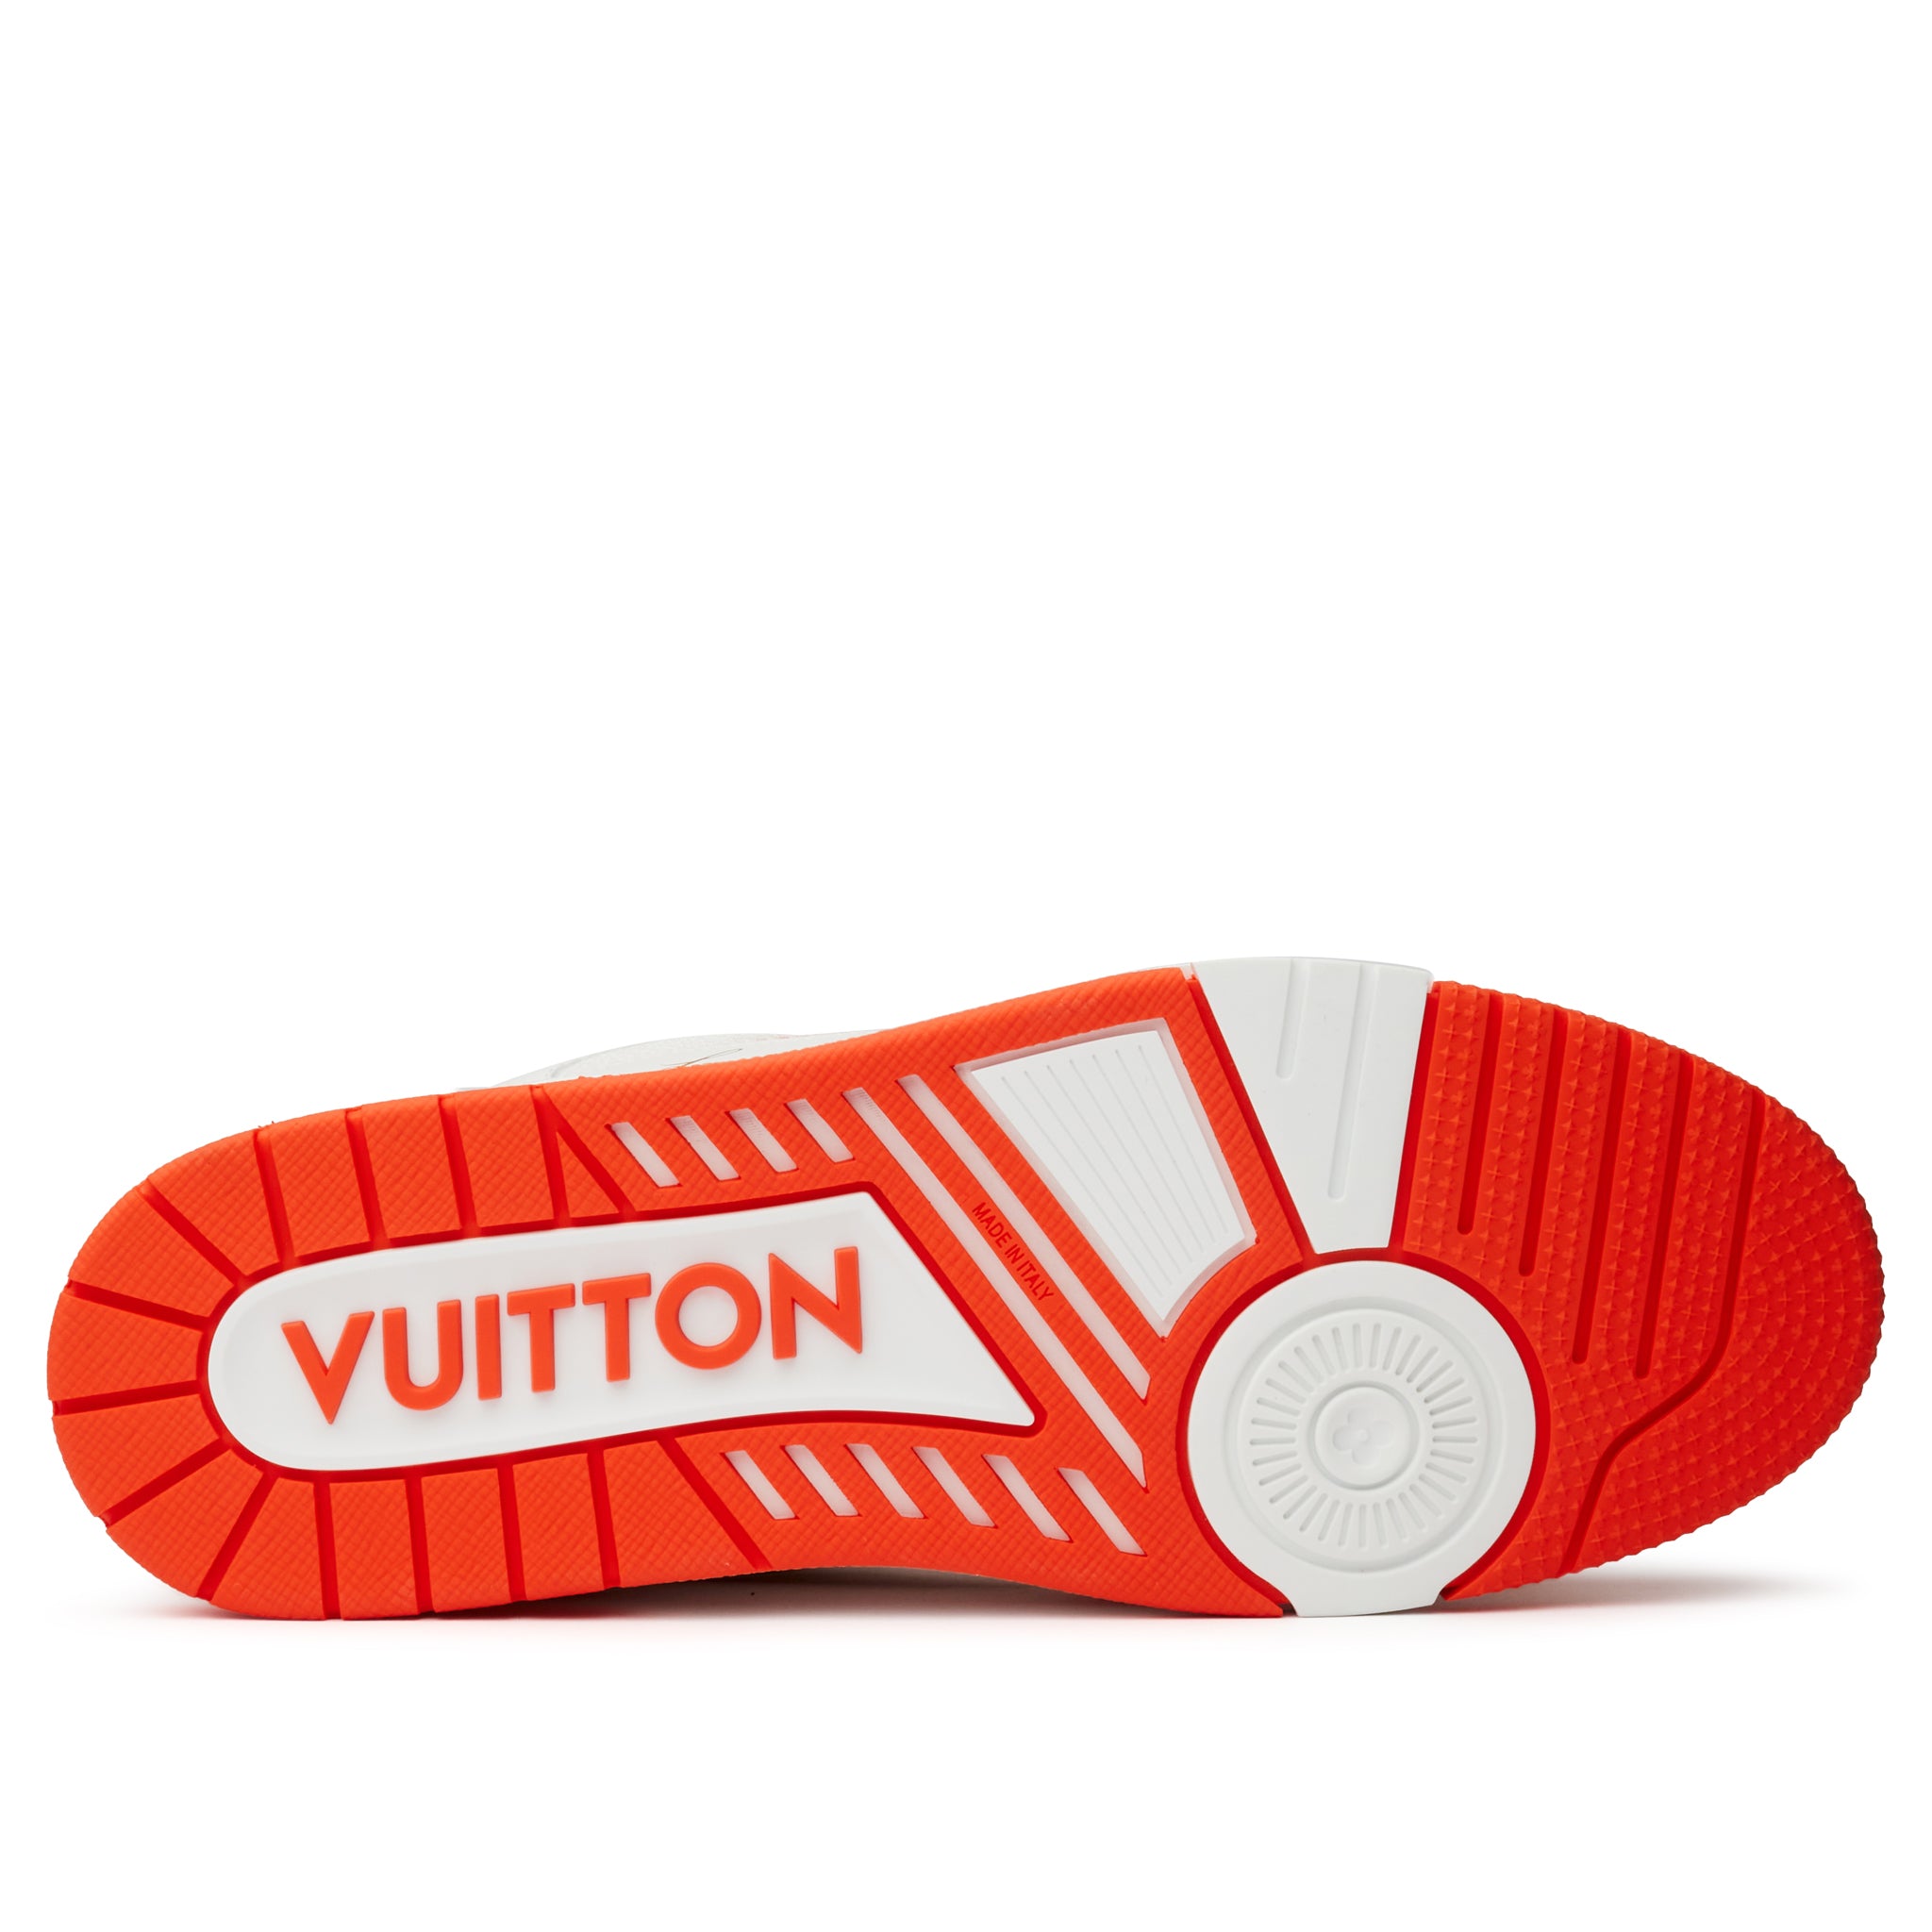 Image of Louis Vuitton LV Trainer Orange Sneaker